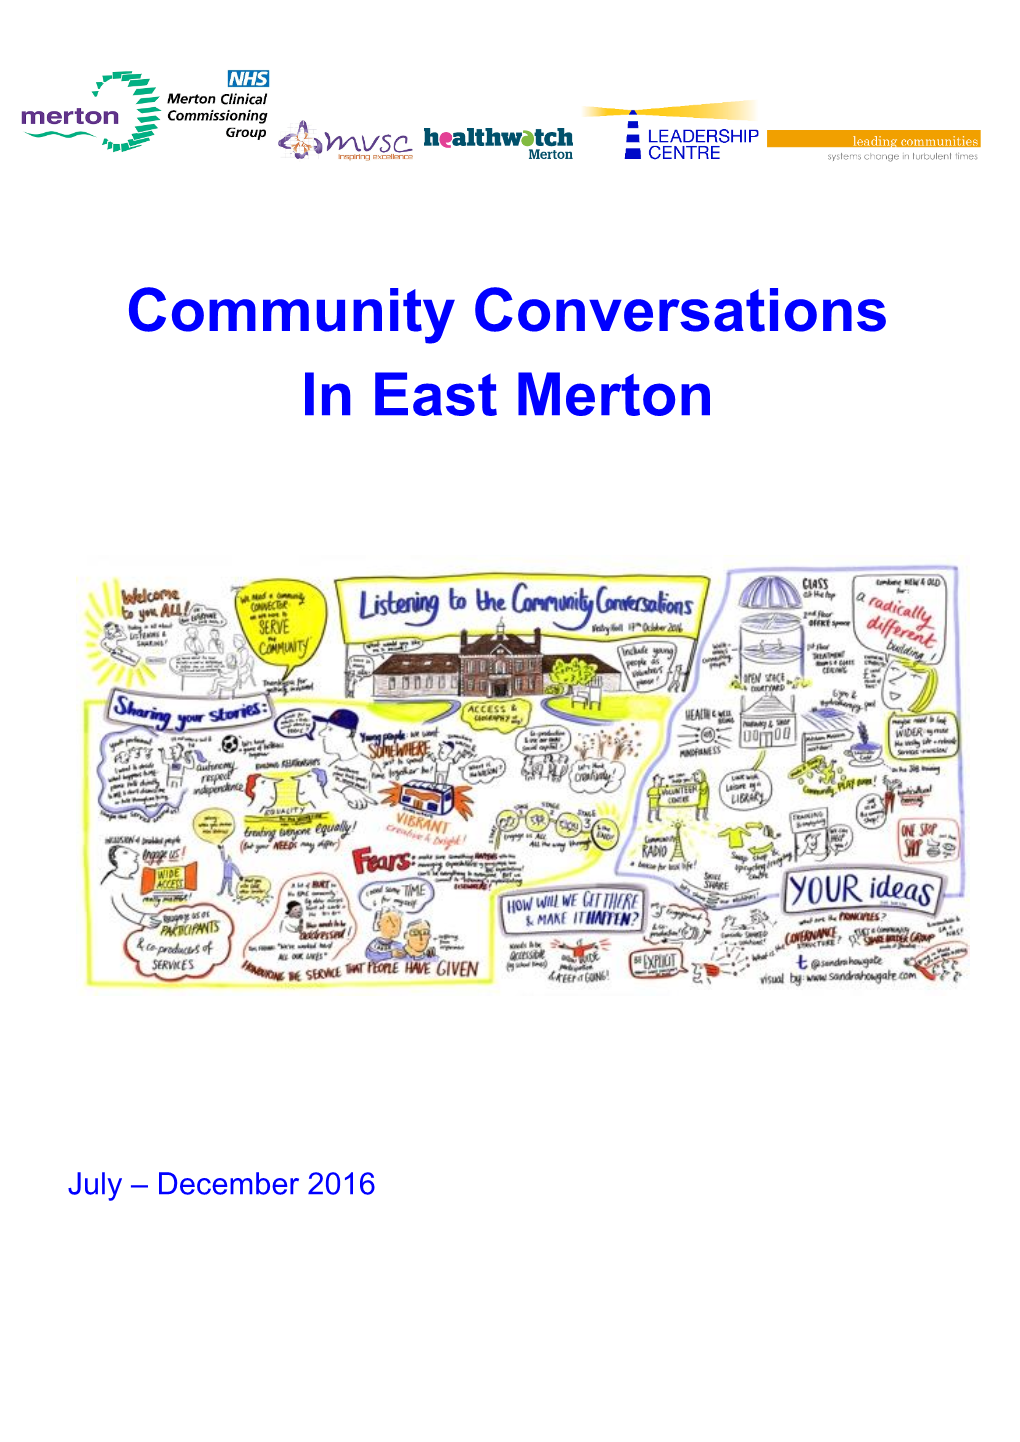 Community Conversations in East Merton